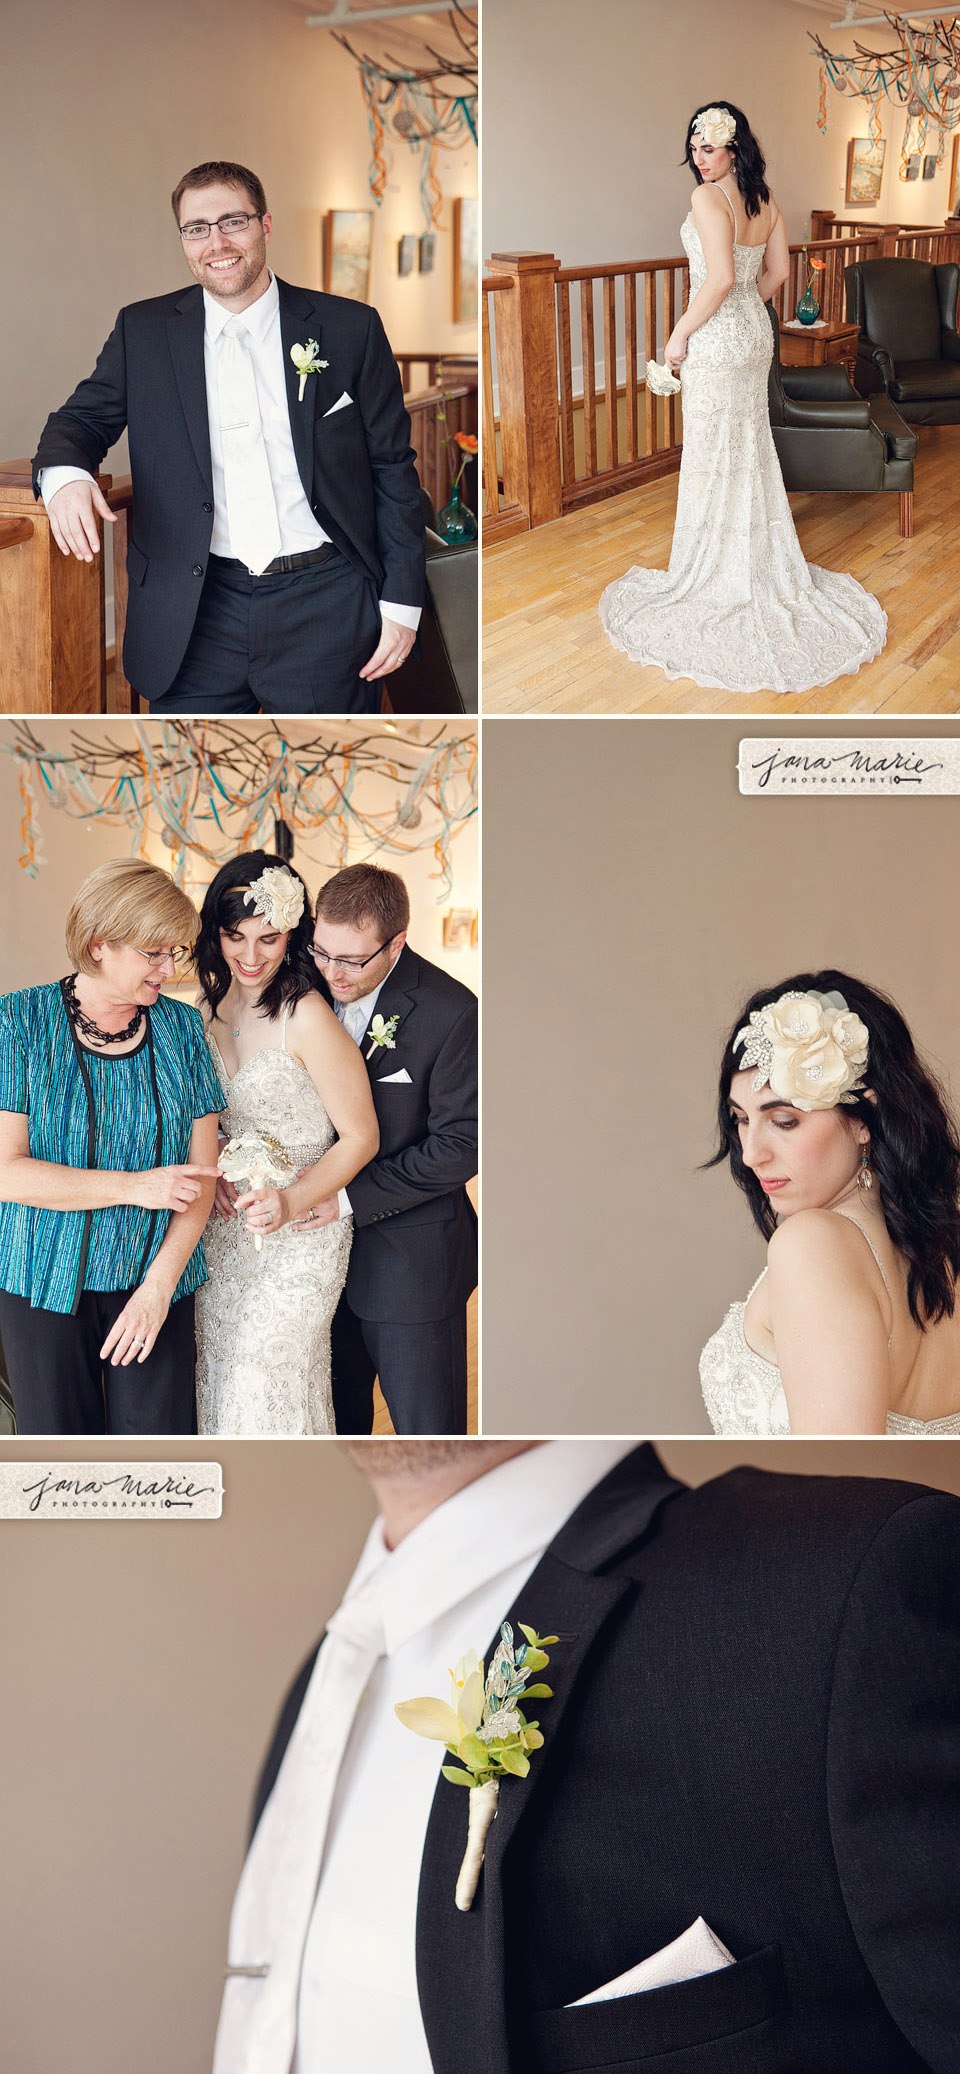 Romance, fun, family, head piece, Kansas City wedding photographer, Jana Marie, Flowers, Etsy, Home made decor